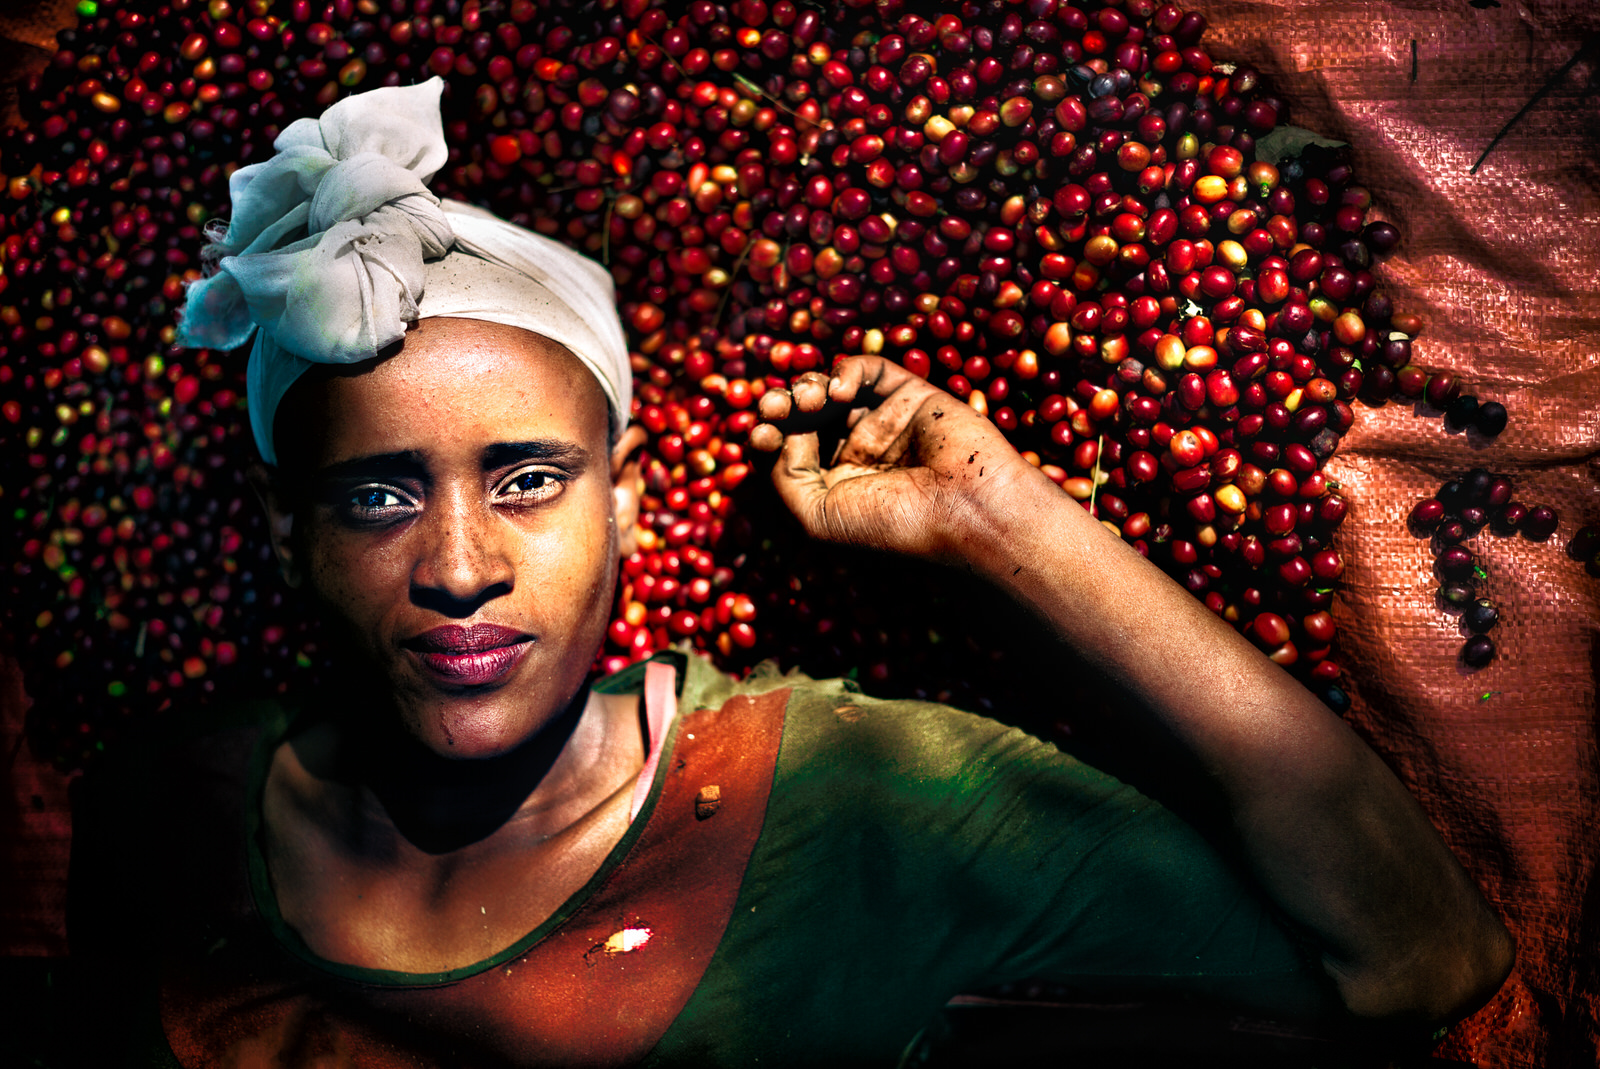 Emily Garthwaite: Coffee Growing from the Yayu Wildforest in Ethiopia